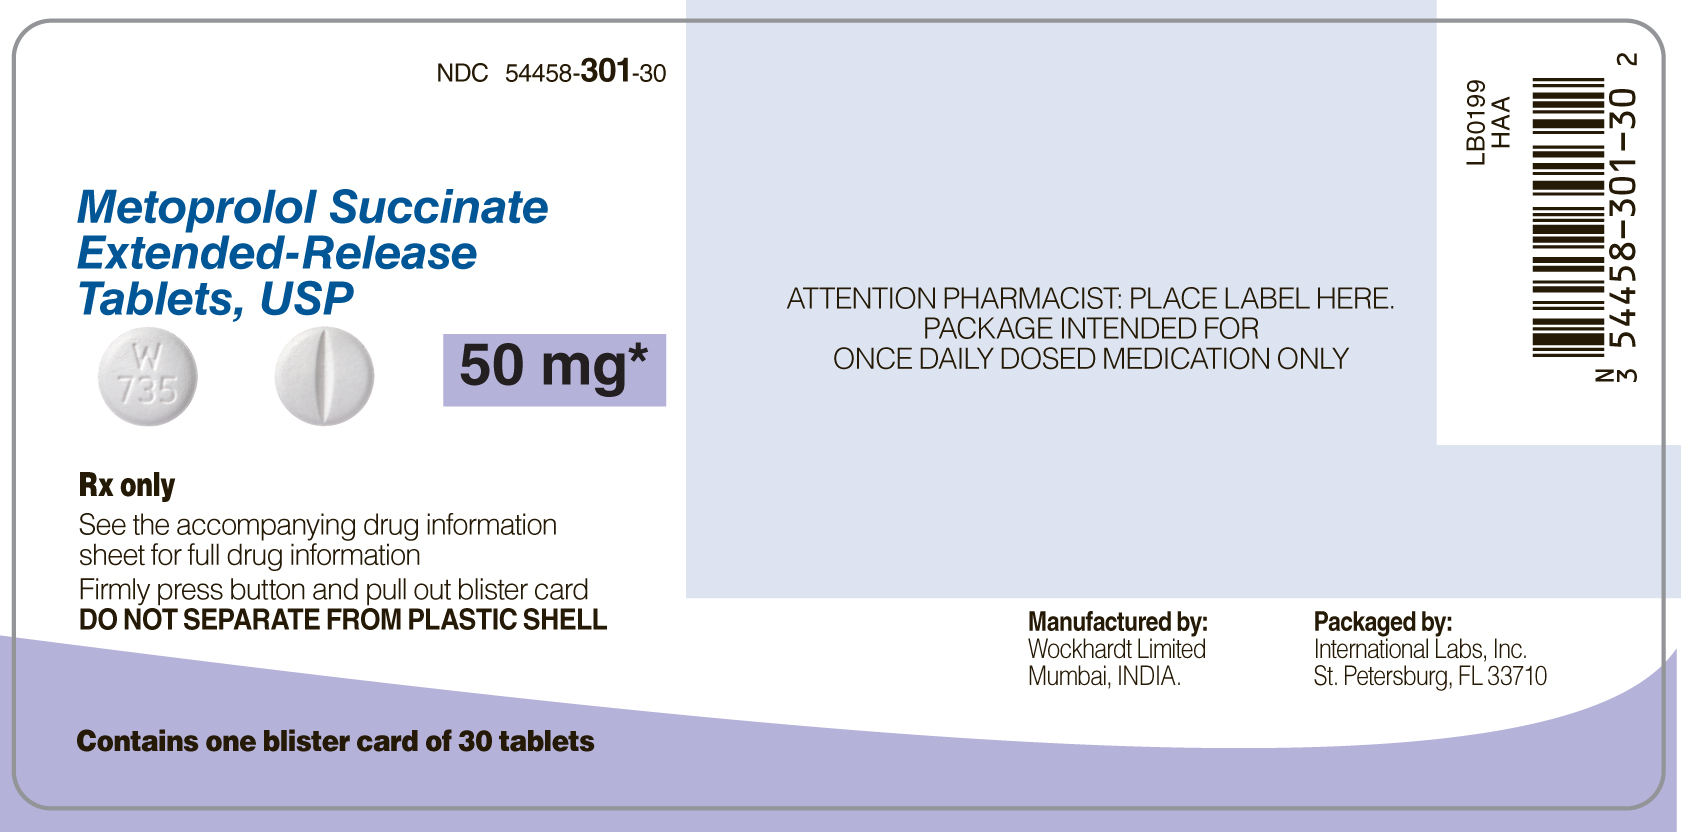 Metroprolol Succinate E-R 50 mg front